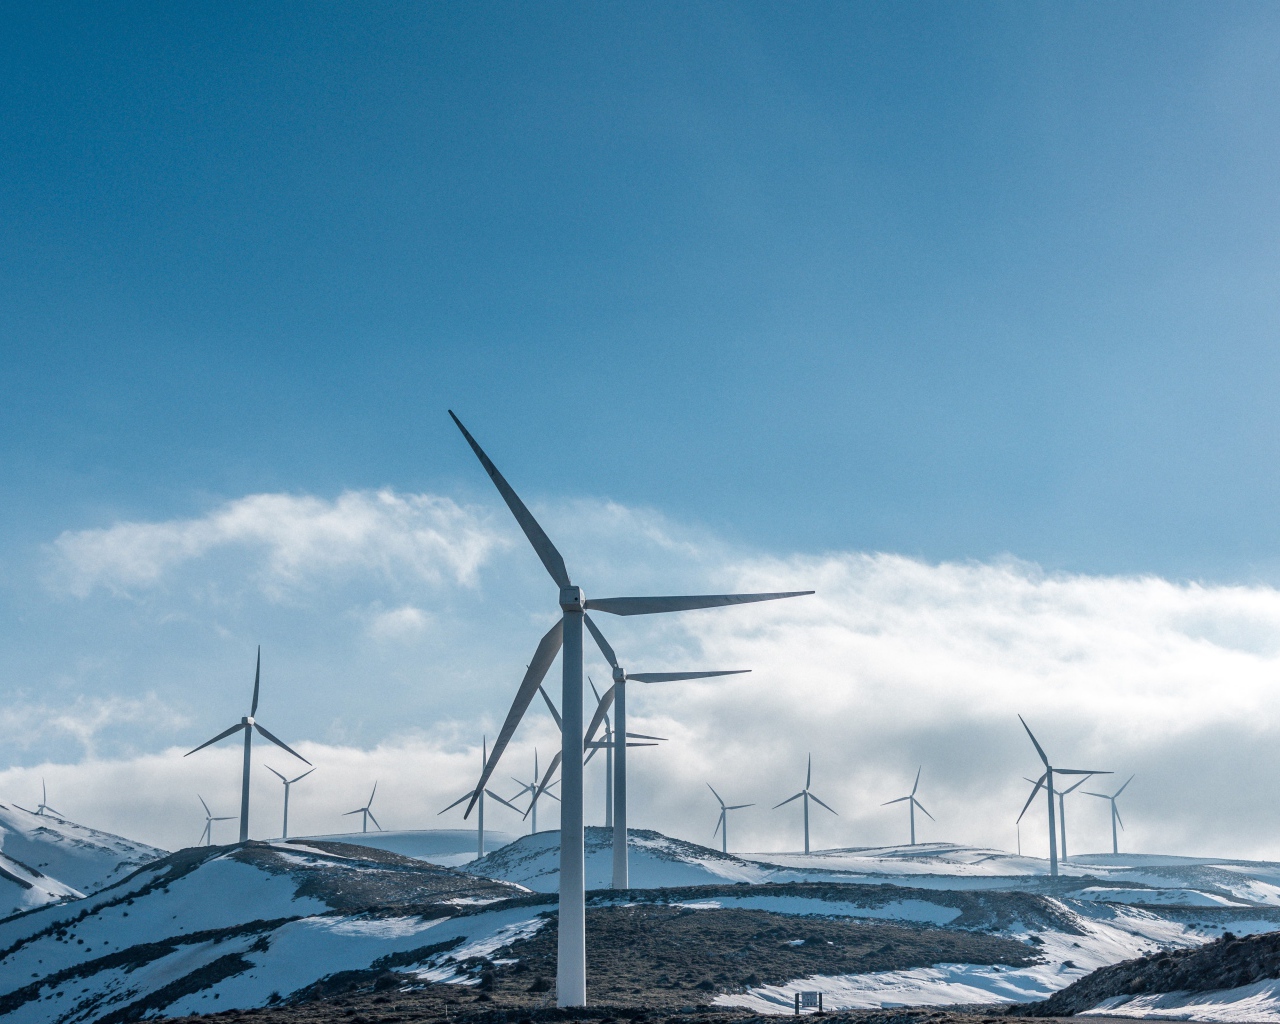 Large wind turbines on snowy slopes